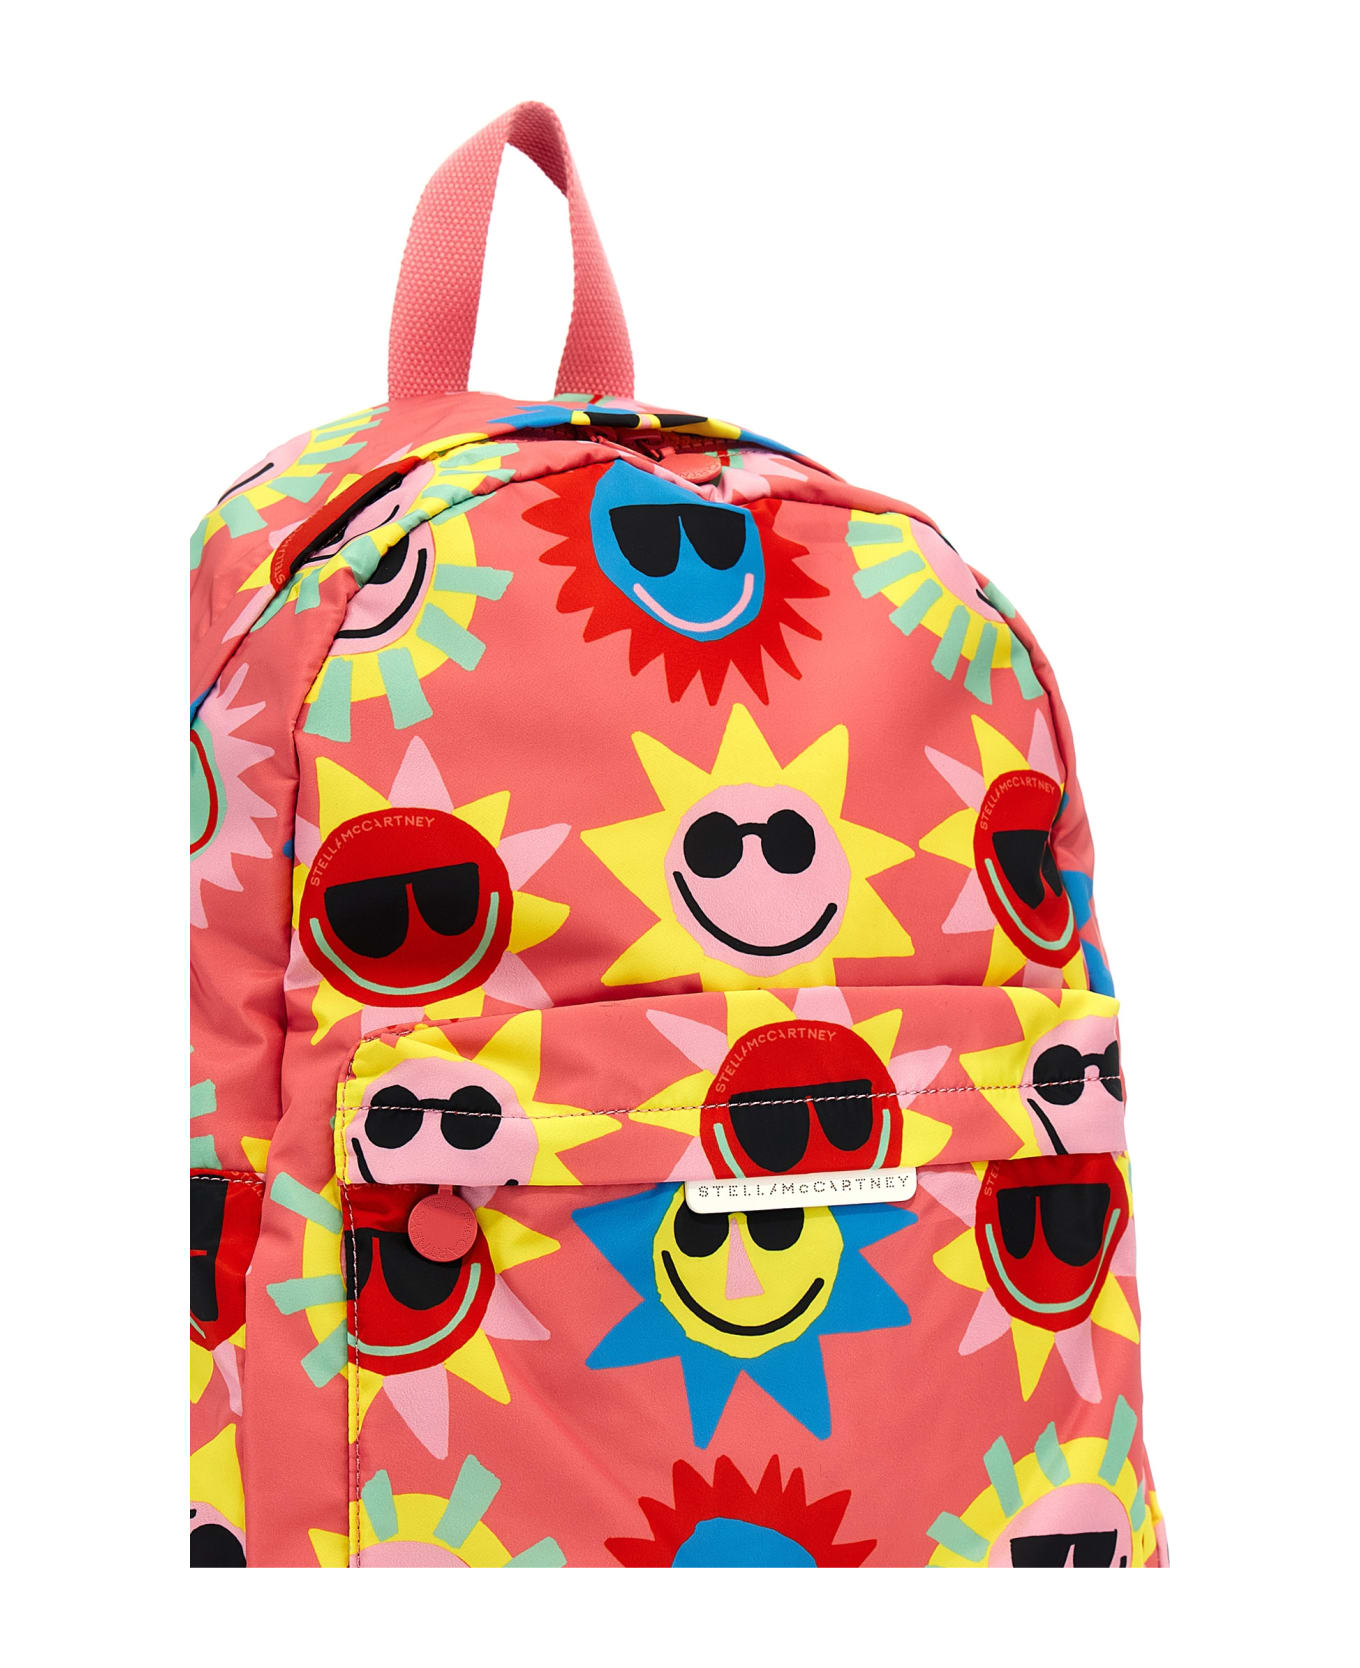 Stella McCartney Kids Printed Backpack - Dmc